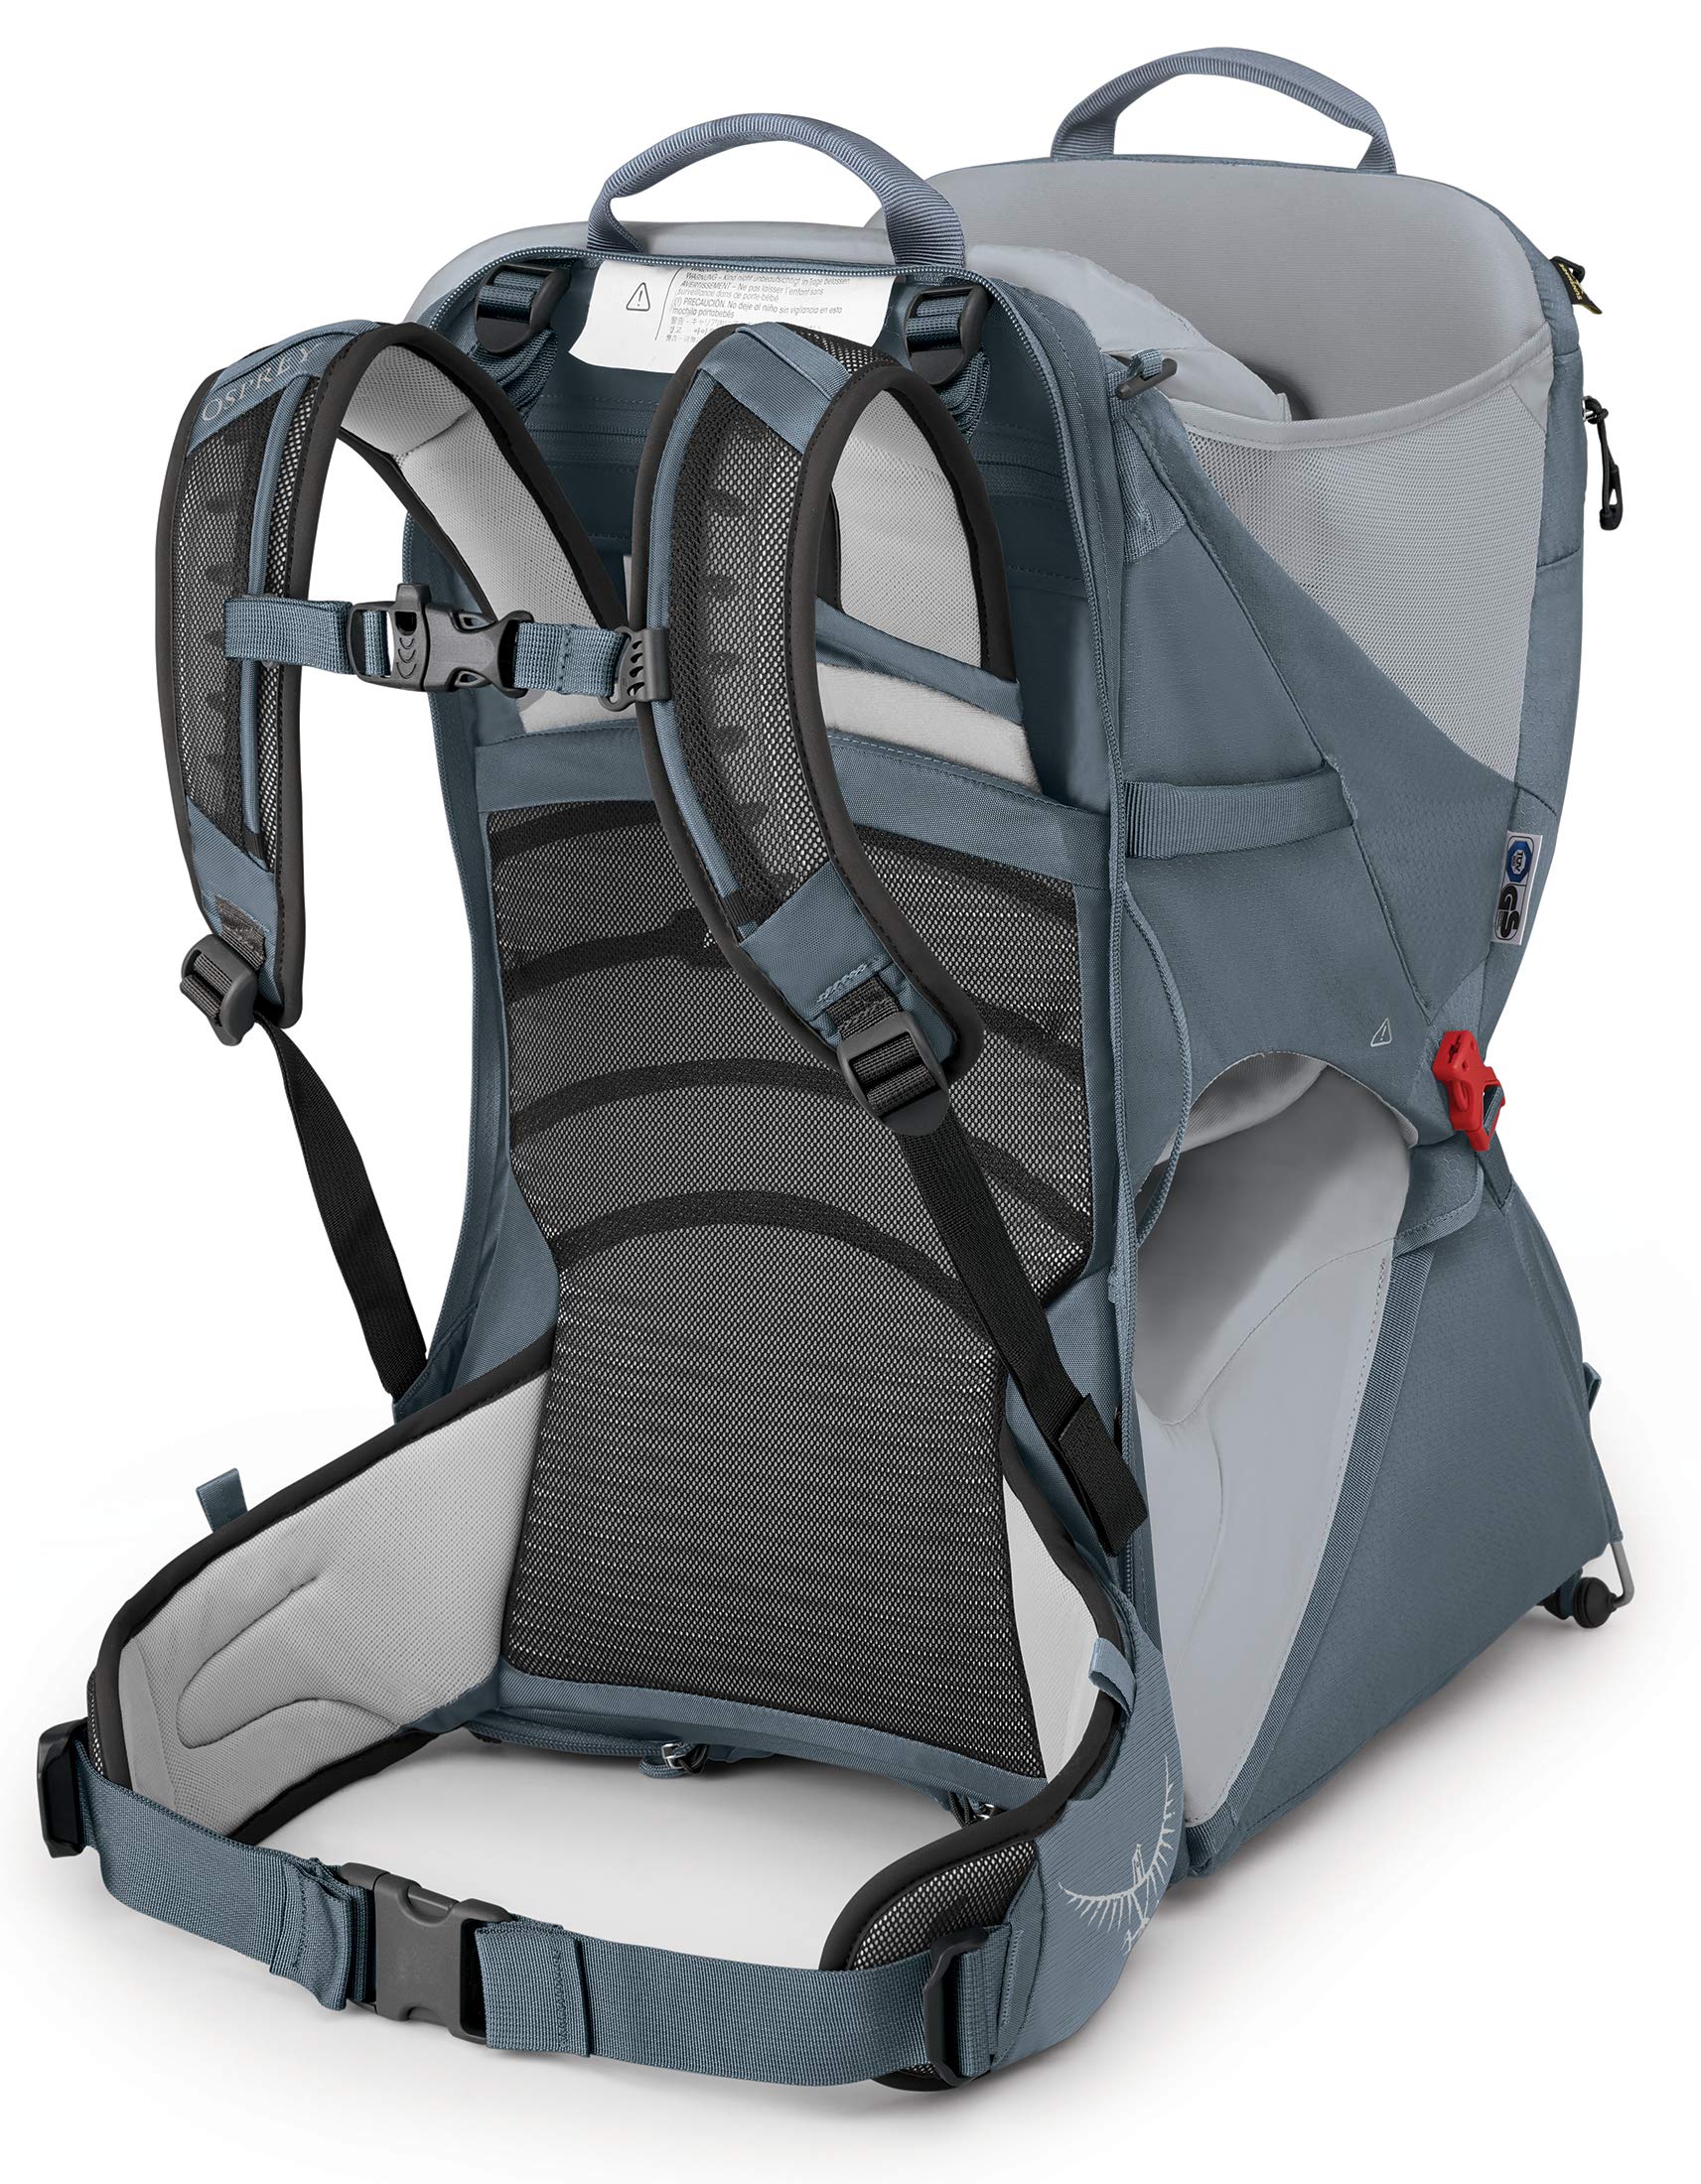 Osprey Poco LT Lightweight Child Carrier and Backpack for Travel